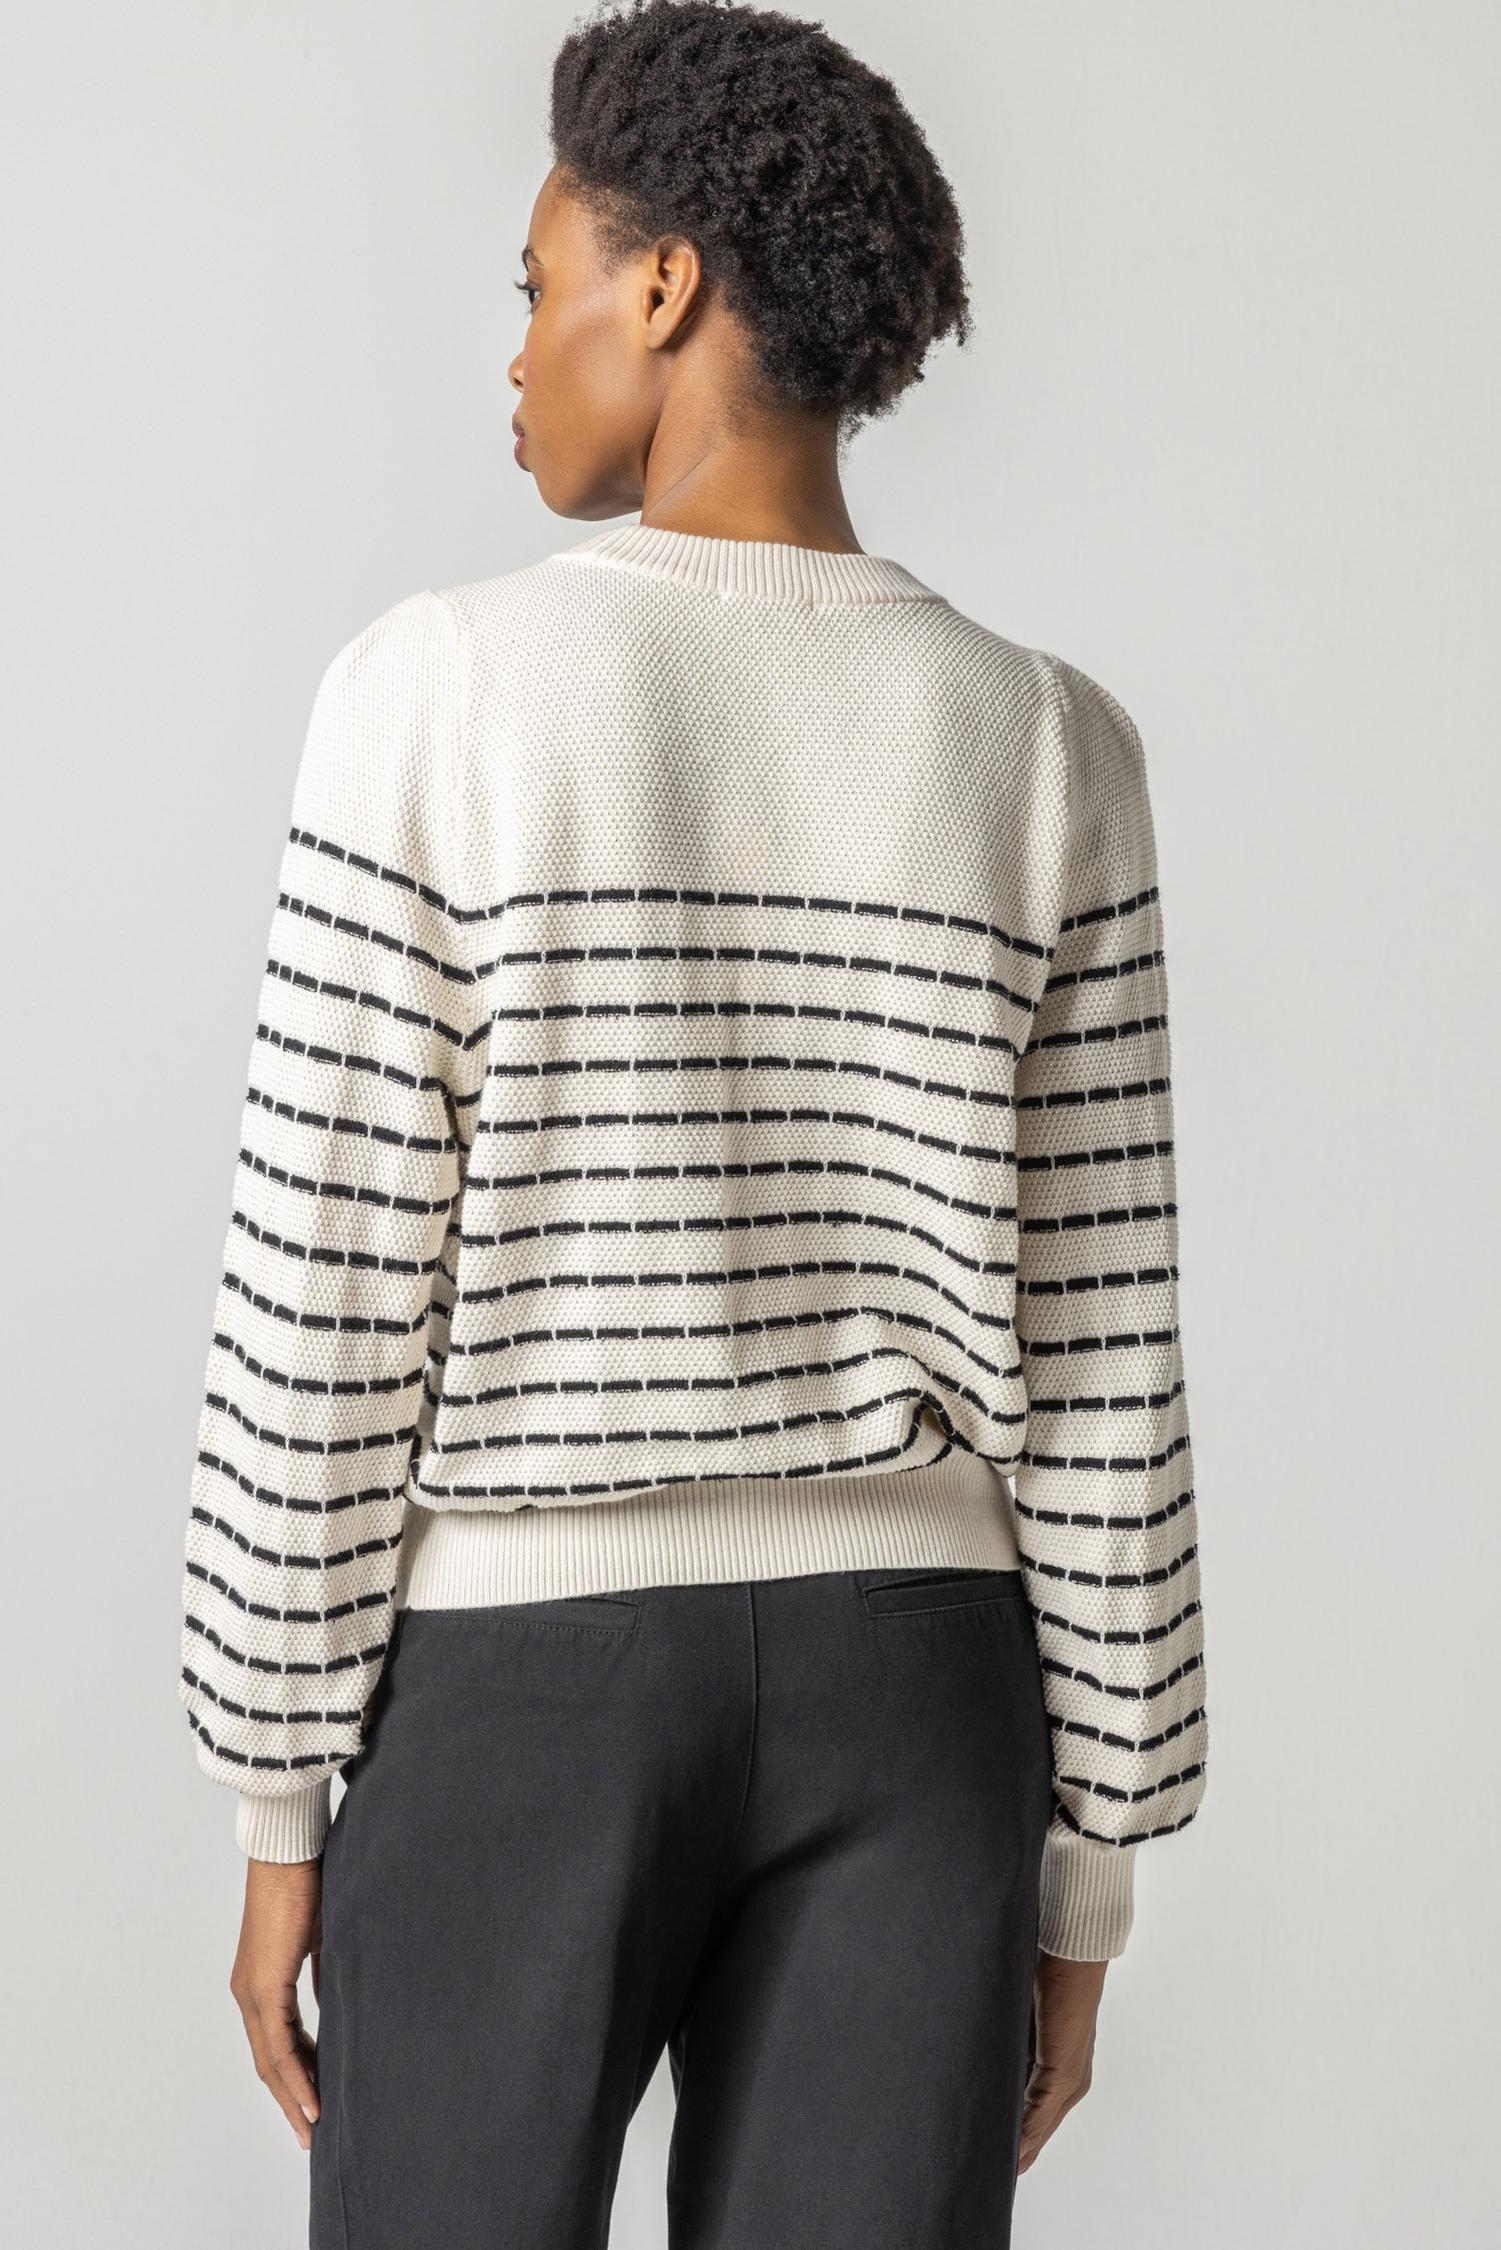 Lilla P - Full Sleeve Crewneck Sweater / Ivory w/ Black Stripe